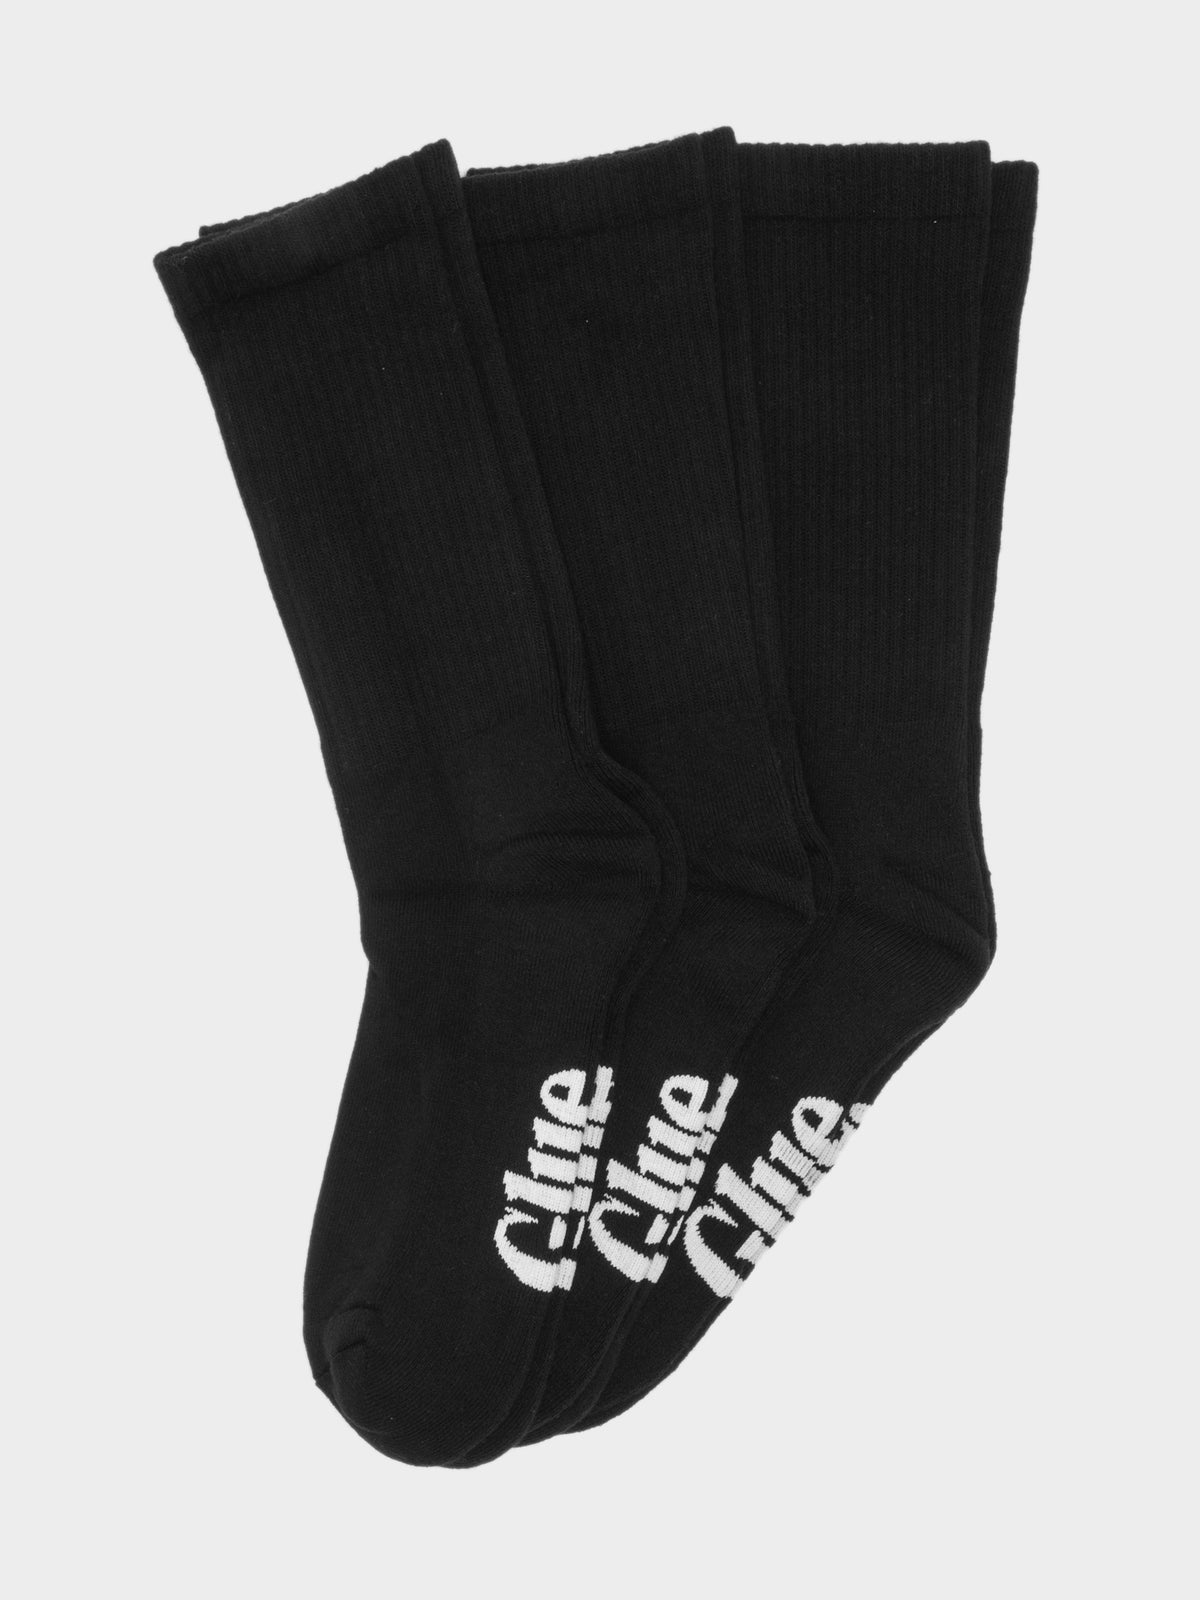 3 Pairs of Crew Socks in Black